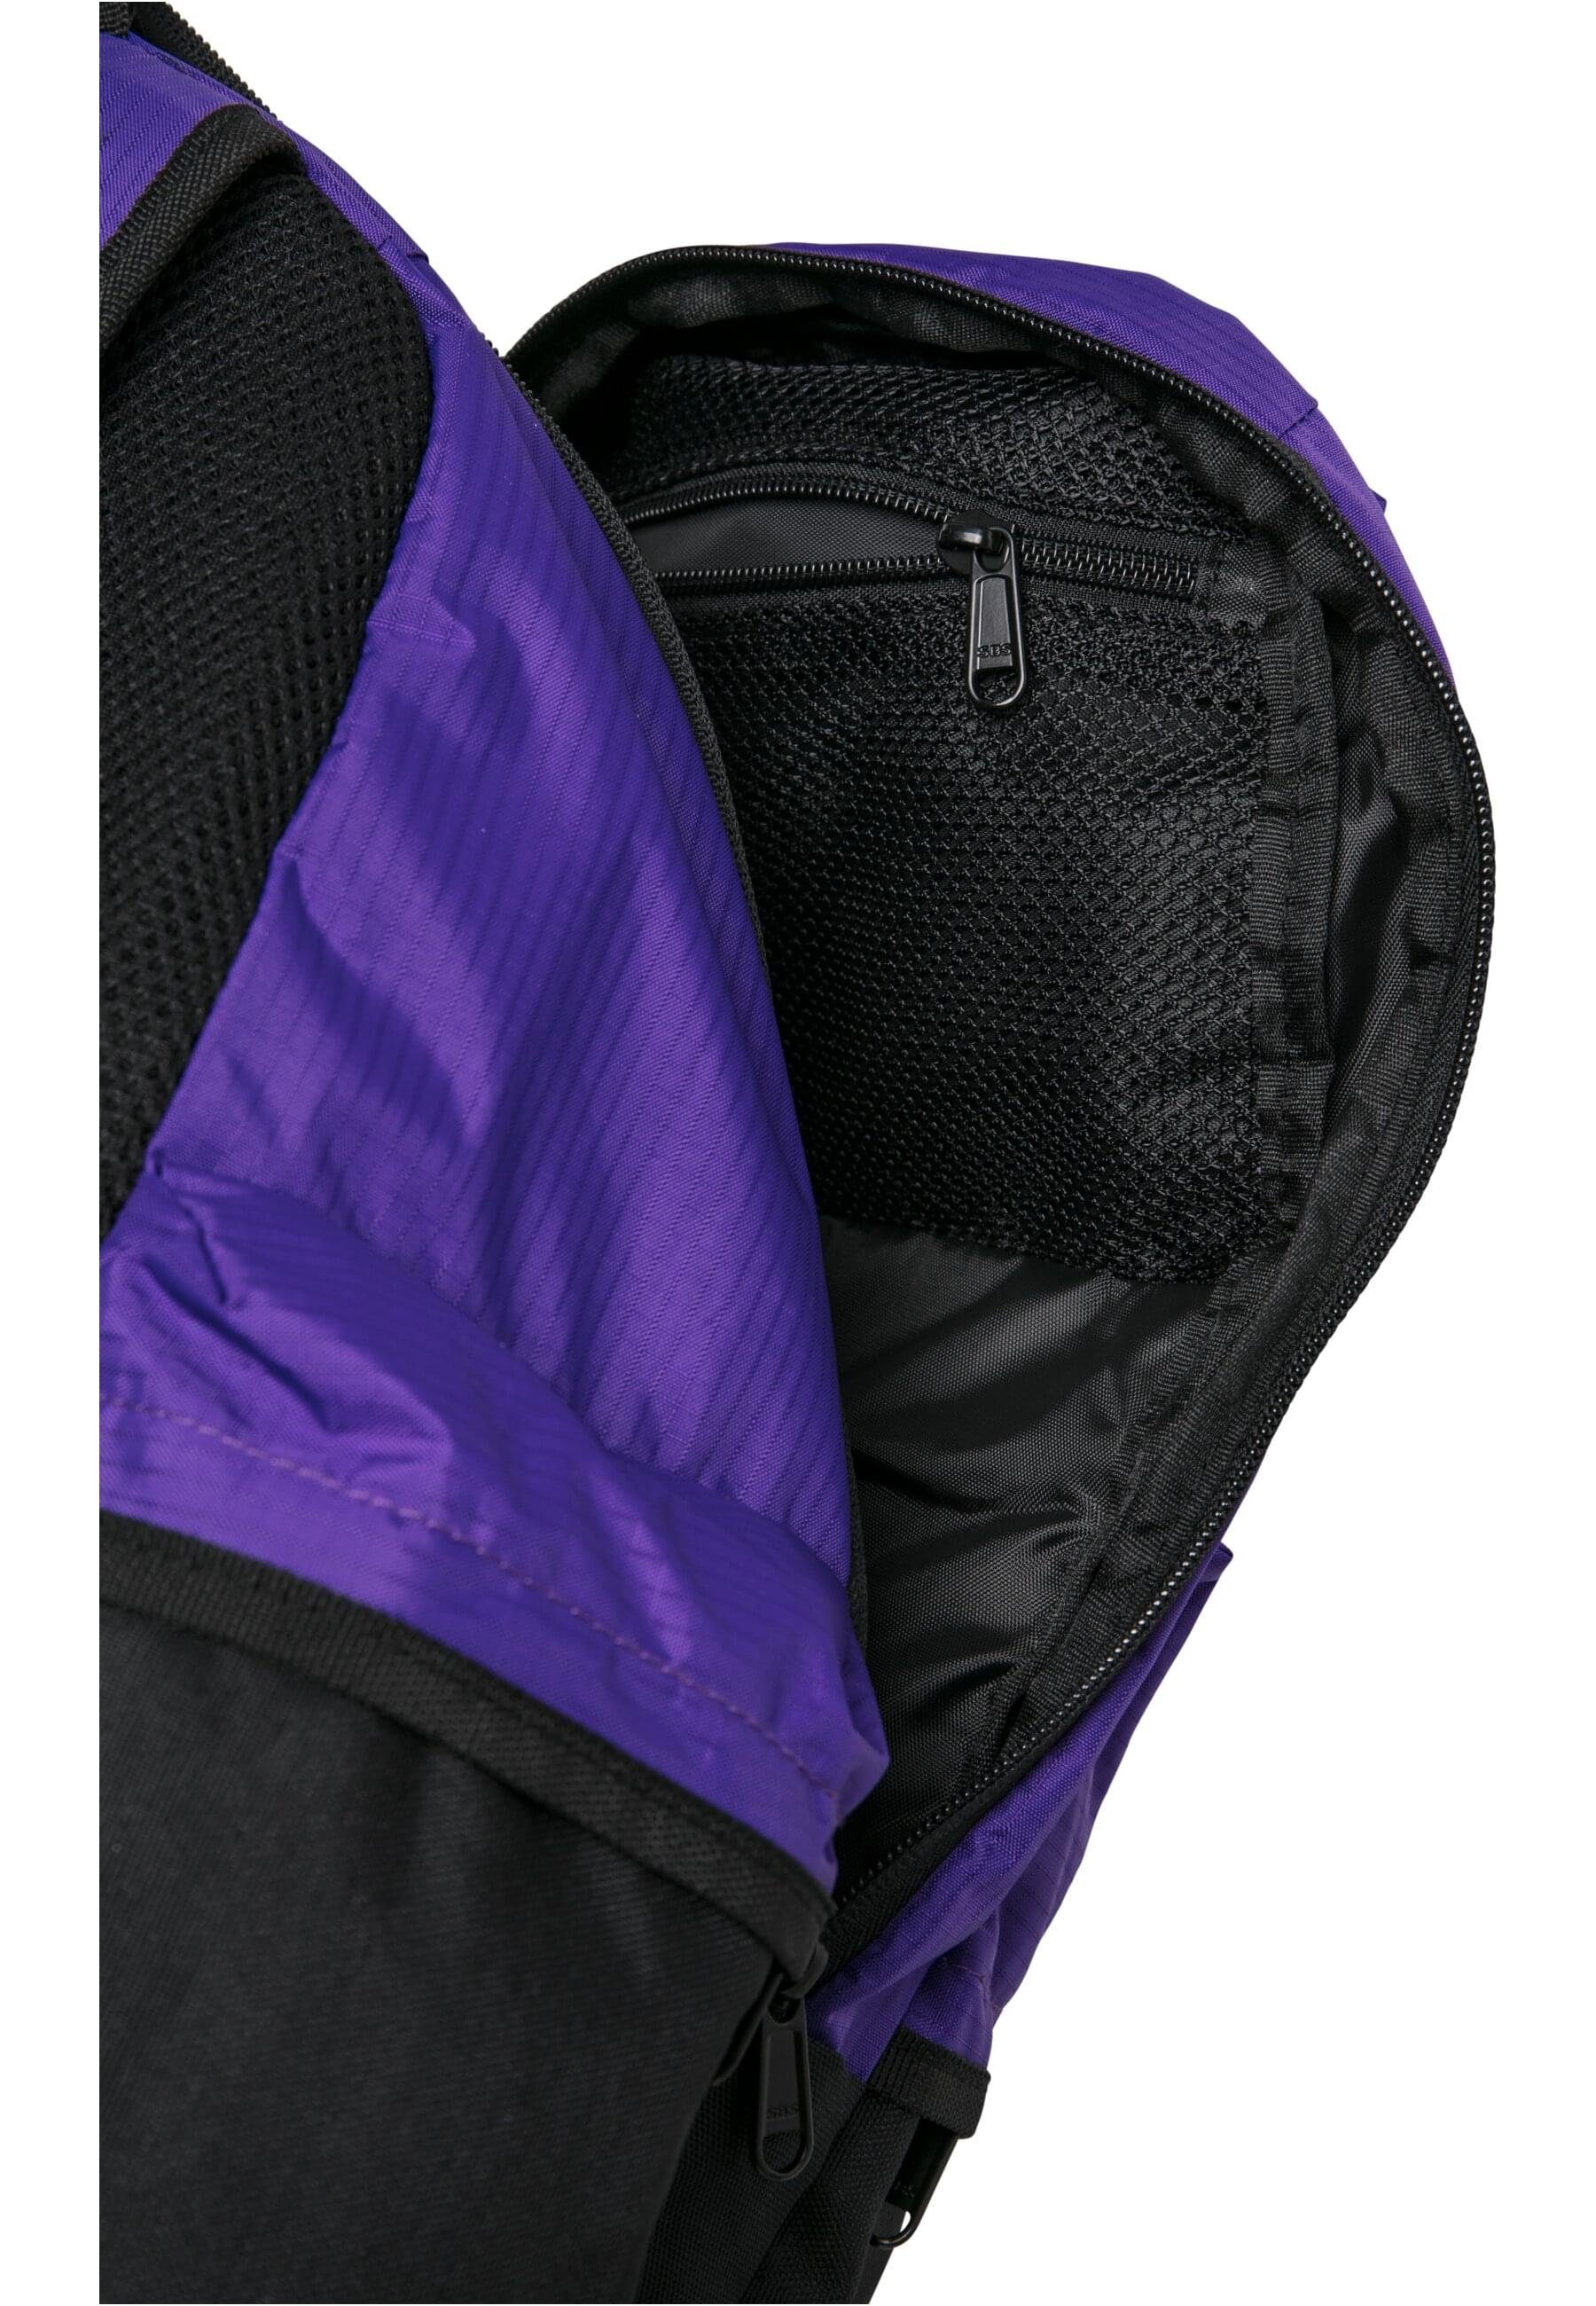 URBAN CLASSICS Rucksack Unisex Backpack Colourblocking ultravilolet/black